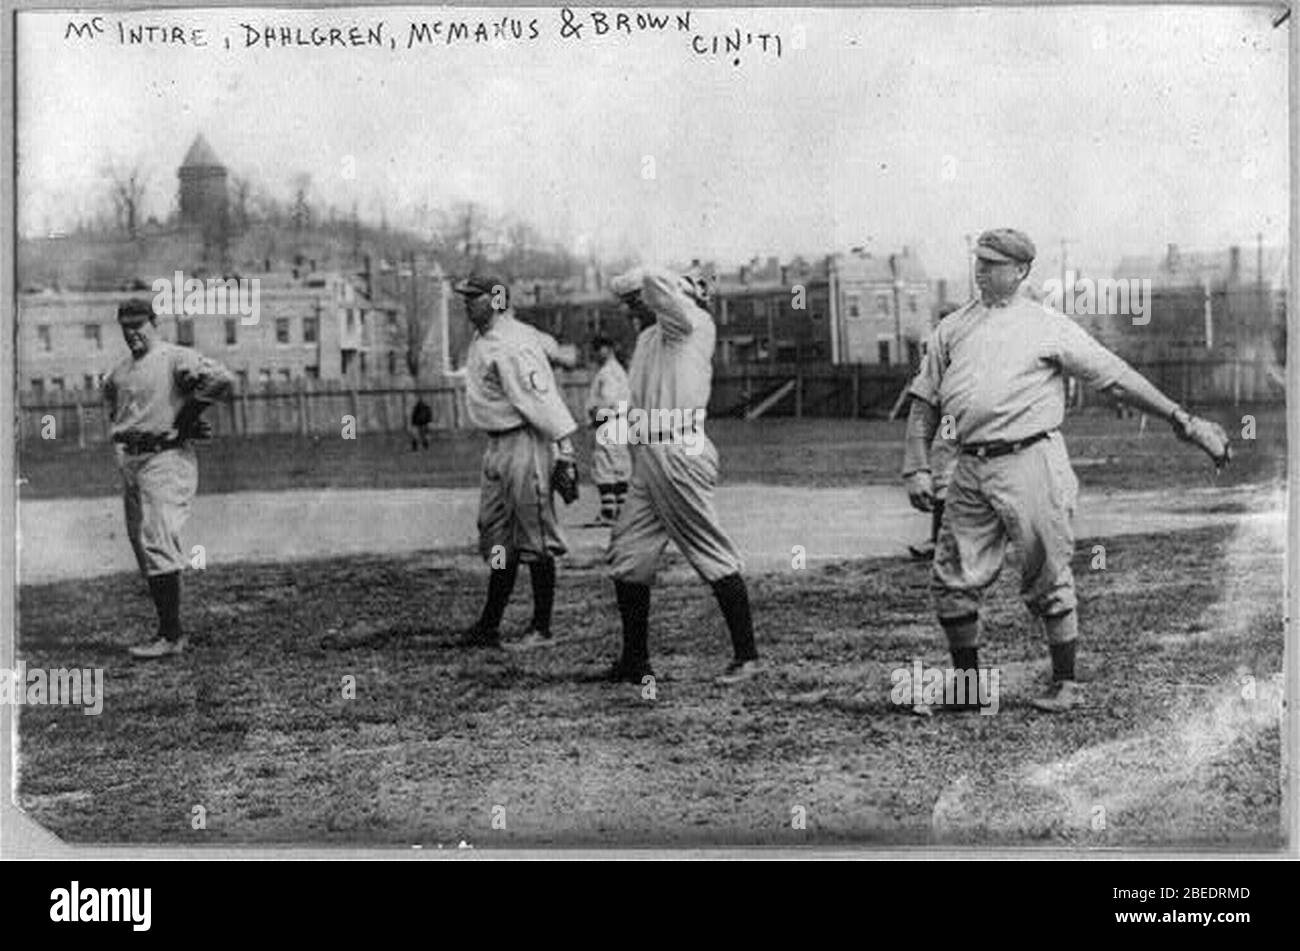 Harry McIntyre Dahlgren Joab Logan ‘Joe‘ McManus und Mordecai ‘Three Fingers‘ Brown of Cincinnati Baseball Team on Field Stockfoto